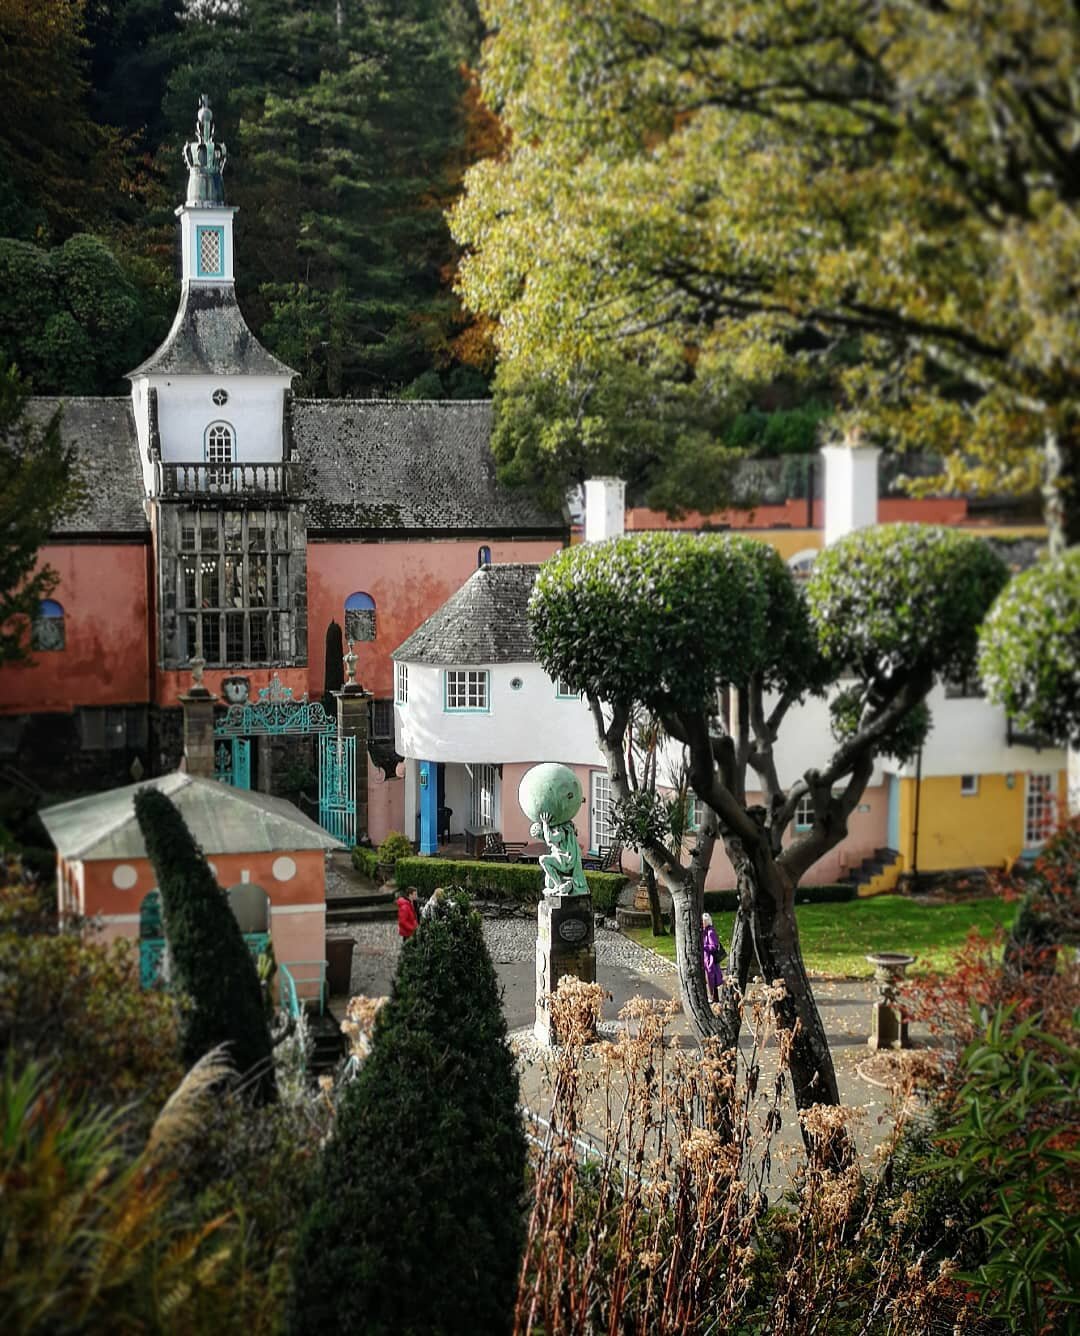 #portmerion #autumn #architectnotinbath #cloughwilliamsellis #idea #vision #cymru #wales #landscapedesign #landscapedgarden #magicalgarden